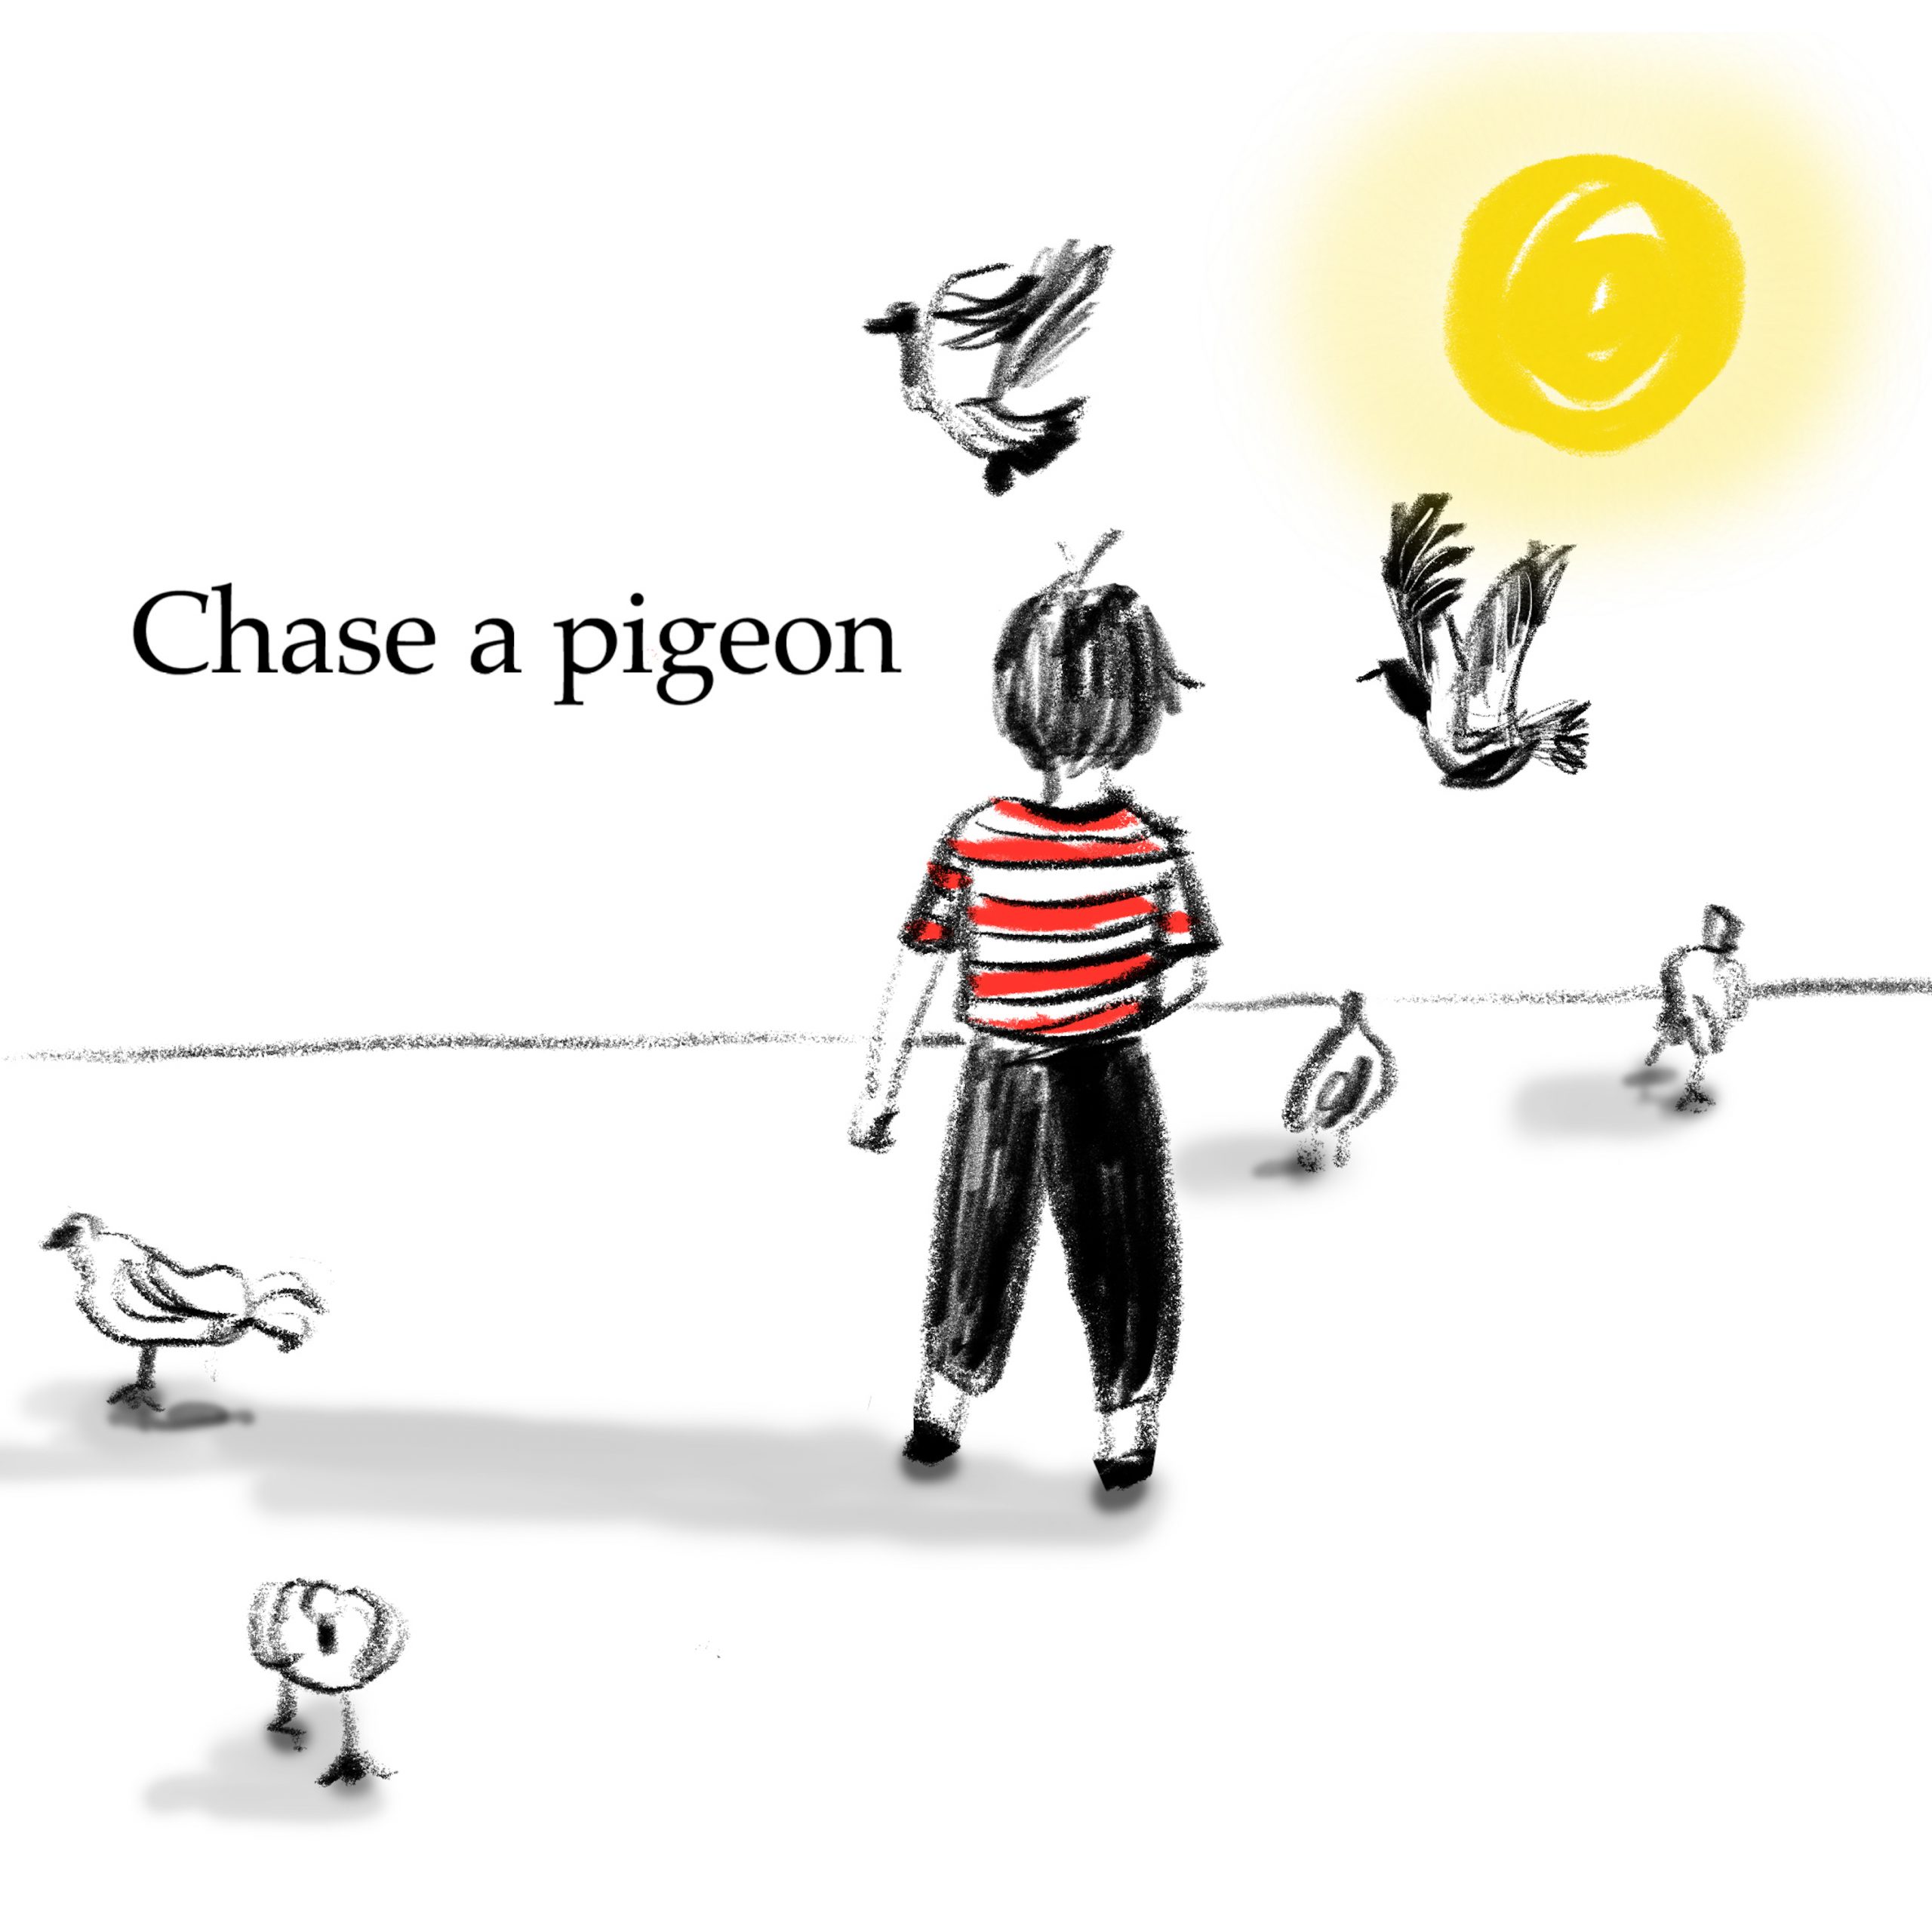 Pigeons & Elevator Buttons, a children's book by Alison Garwood-Jones